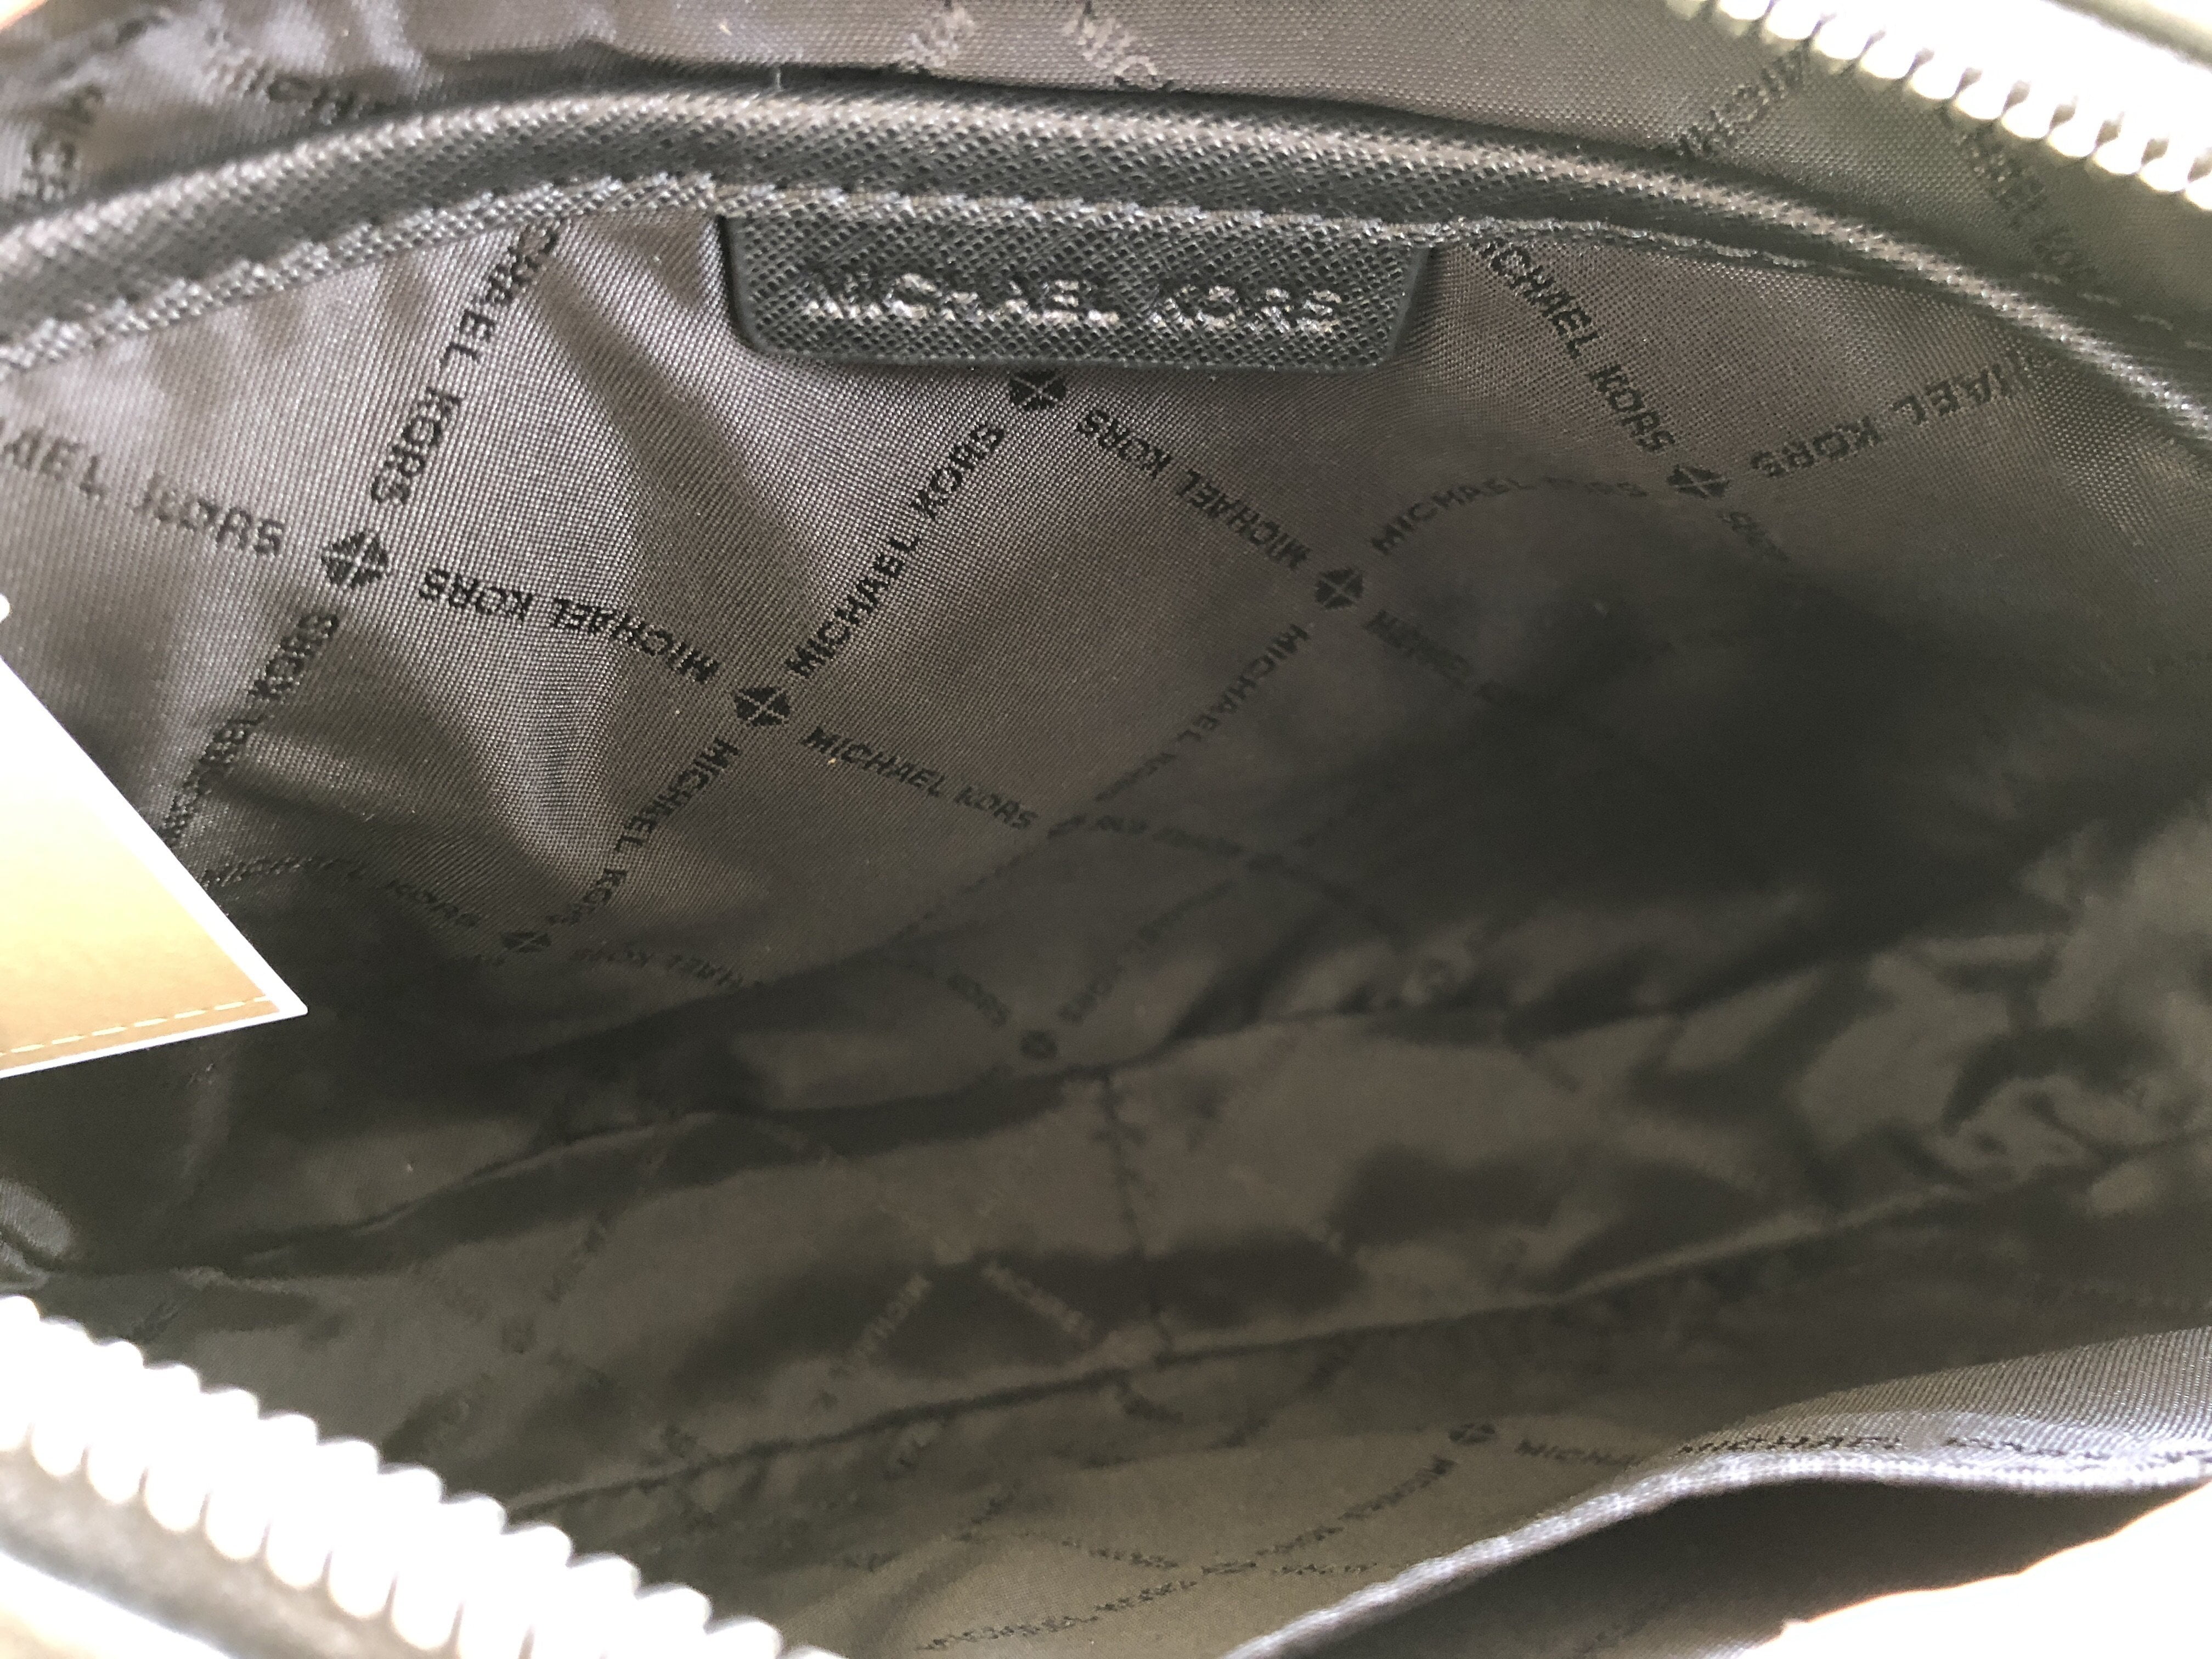 Michael Kors Jet Set Large Saffiano Leather Crossbody Bag - Black/Gold •  Price »